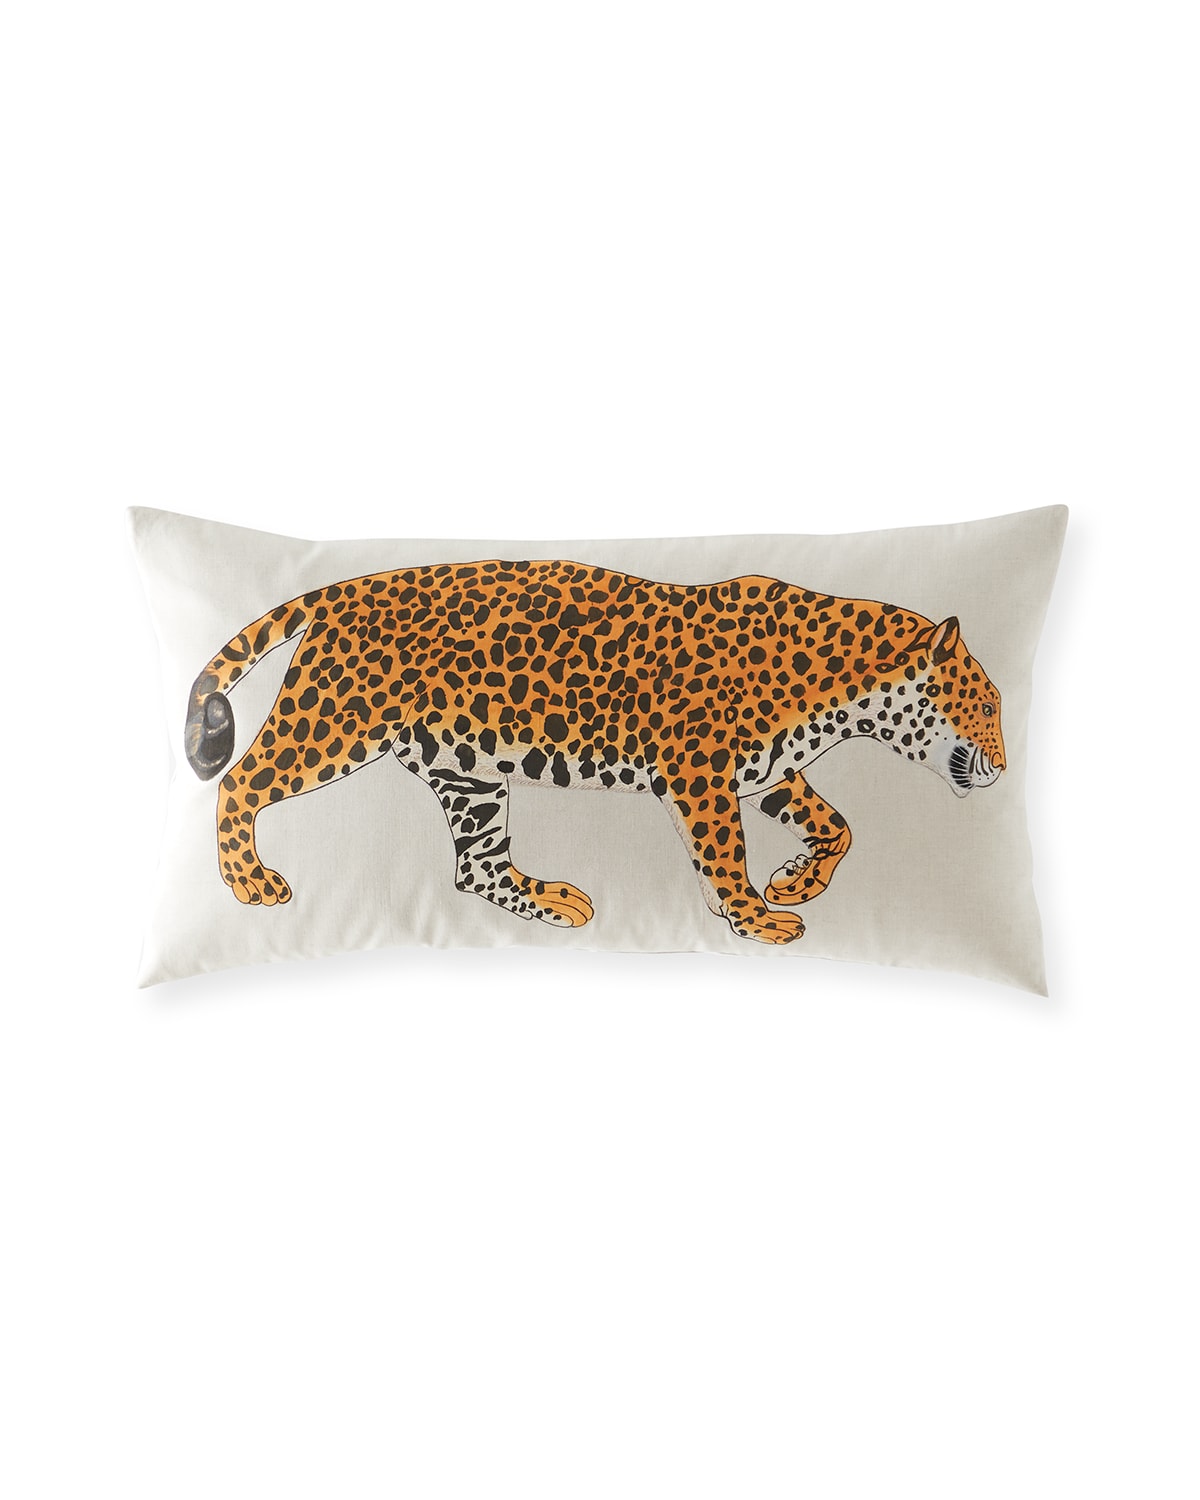 John Robshaw Leopard Bolster Pillow, 17" X 32"